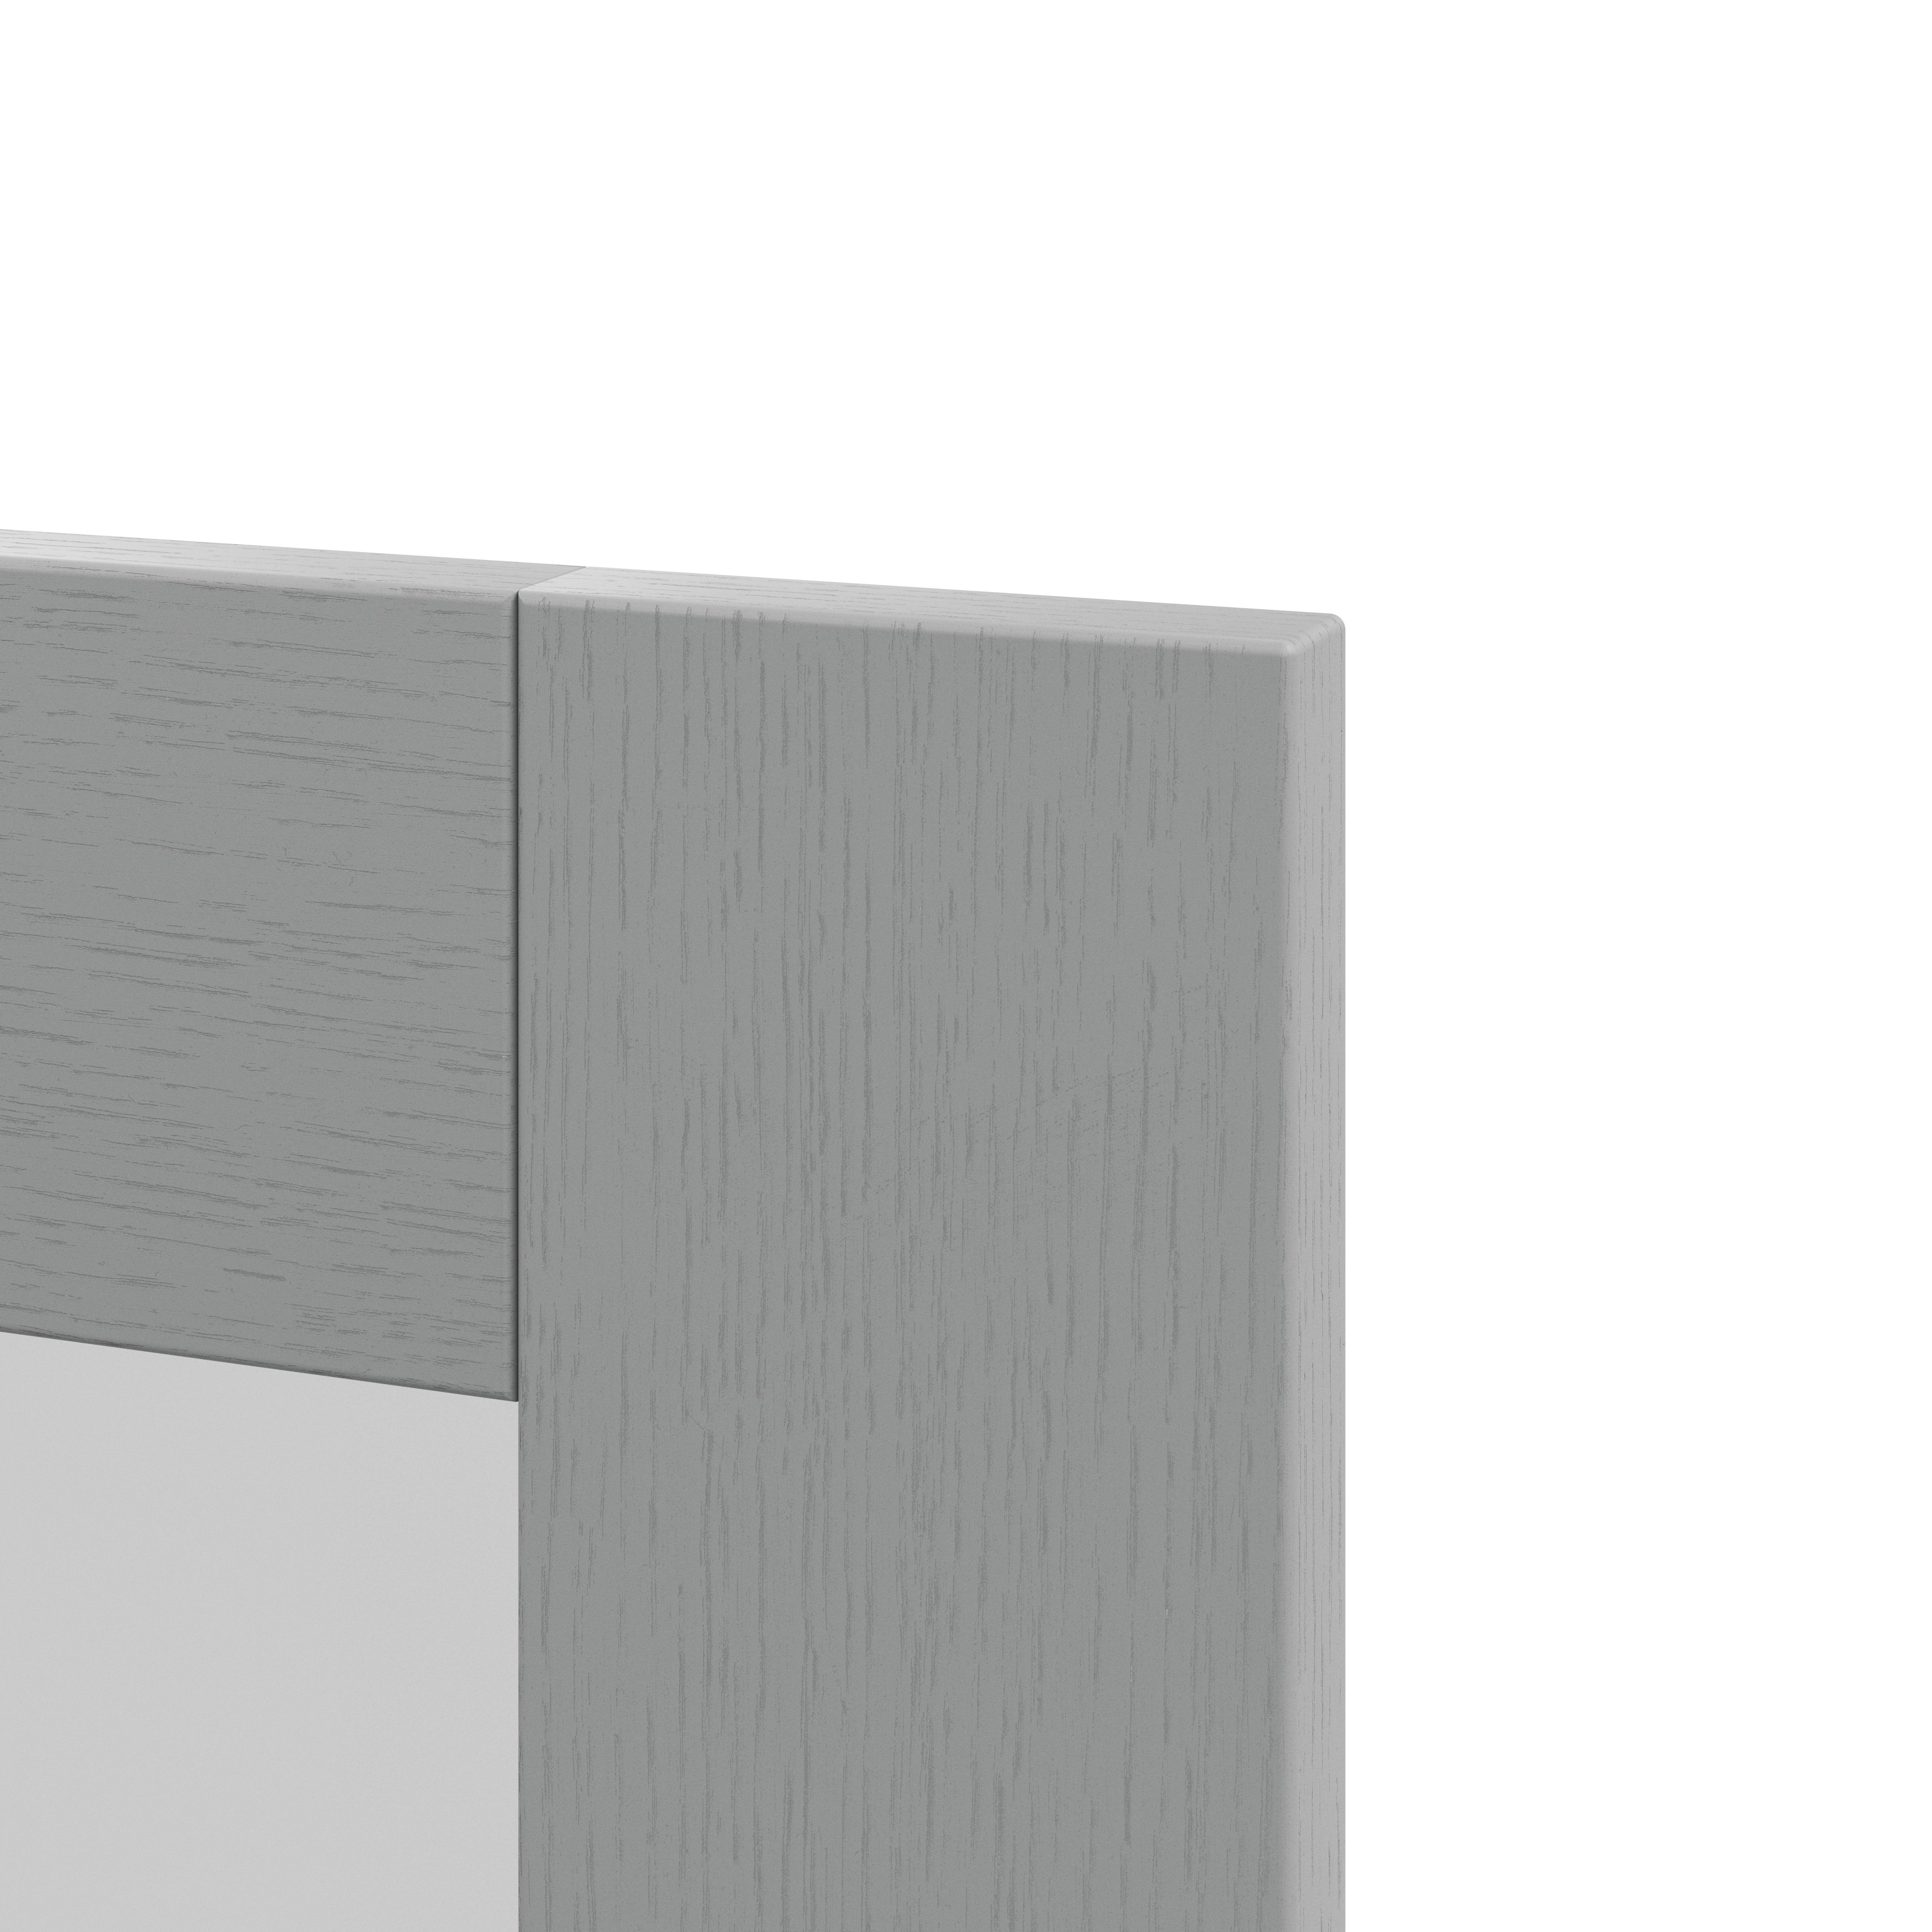 GoodHome Alpinia Matt Slate Grey Painted Wood Effect Shaker Tall glazed Cabinet door (W)500mm (H)895mm (T)18mm